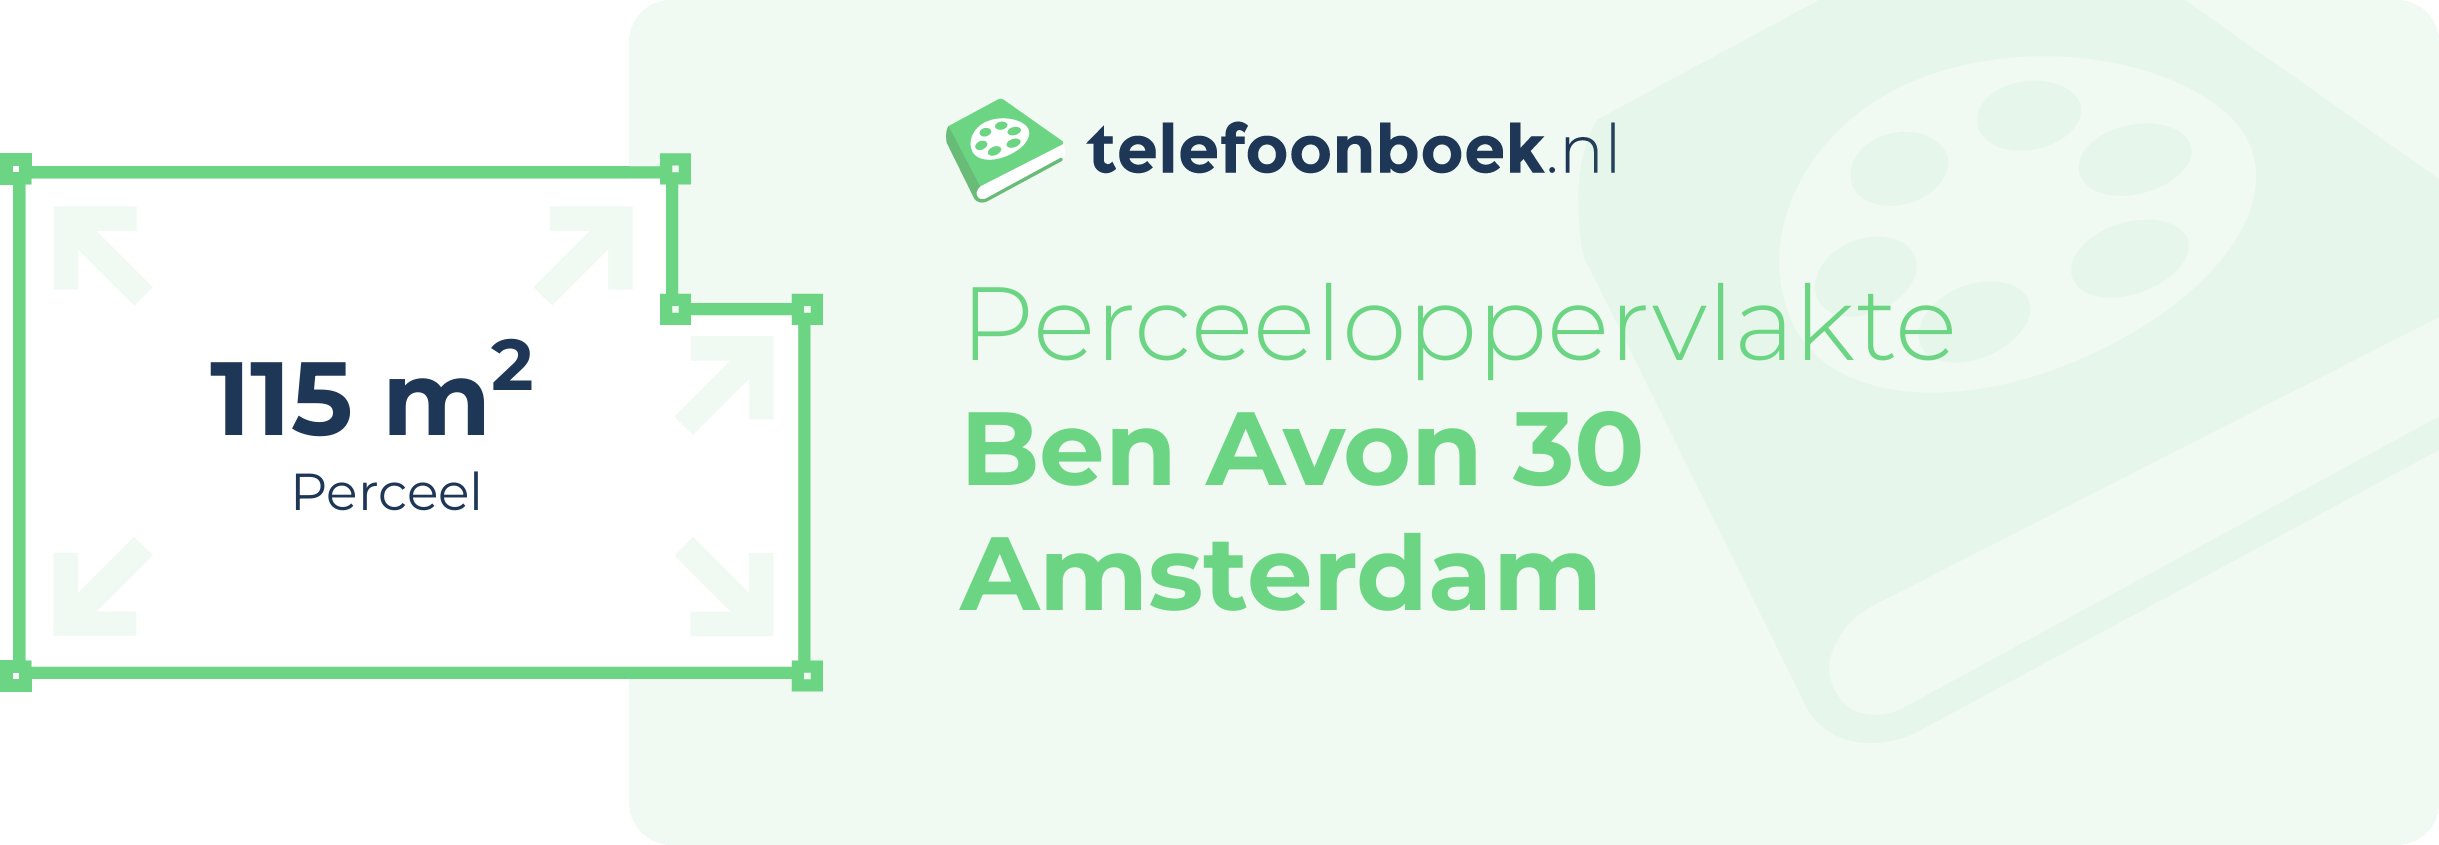 Perceeloppervlakte Ben Avon 30 Amsterdam